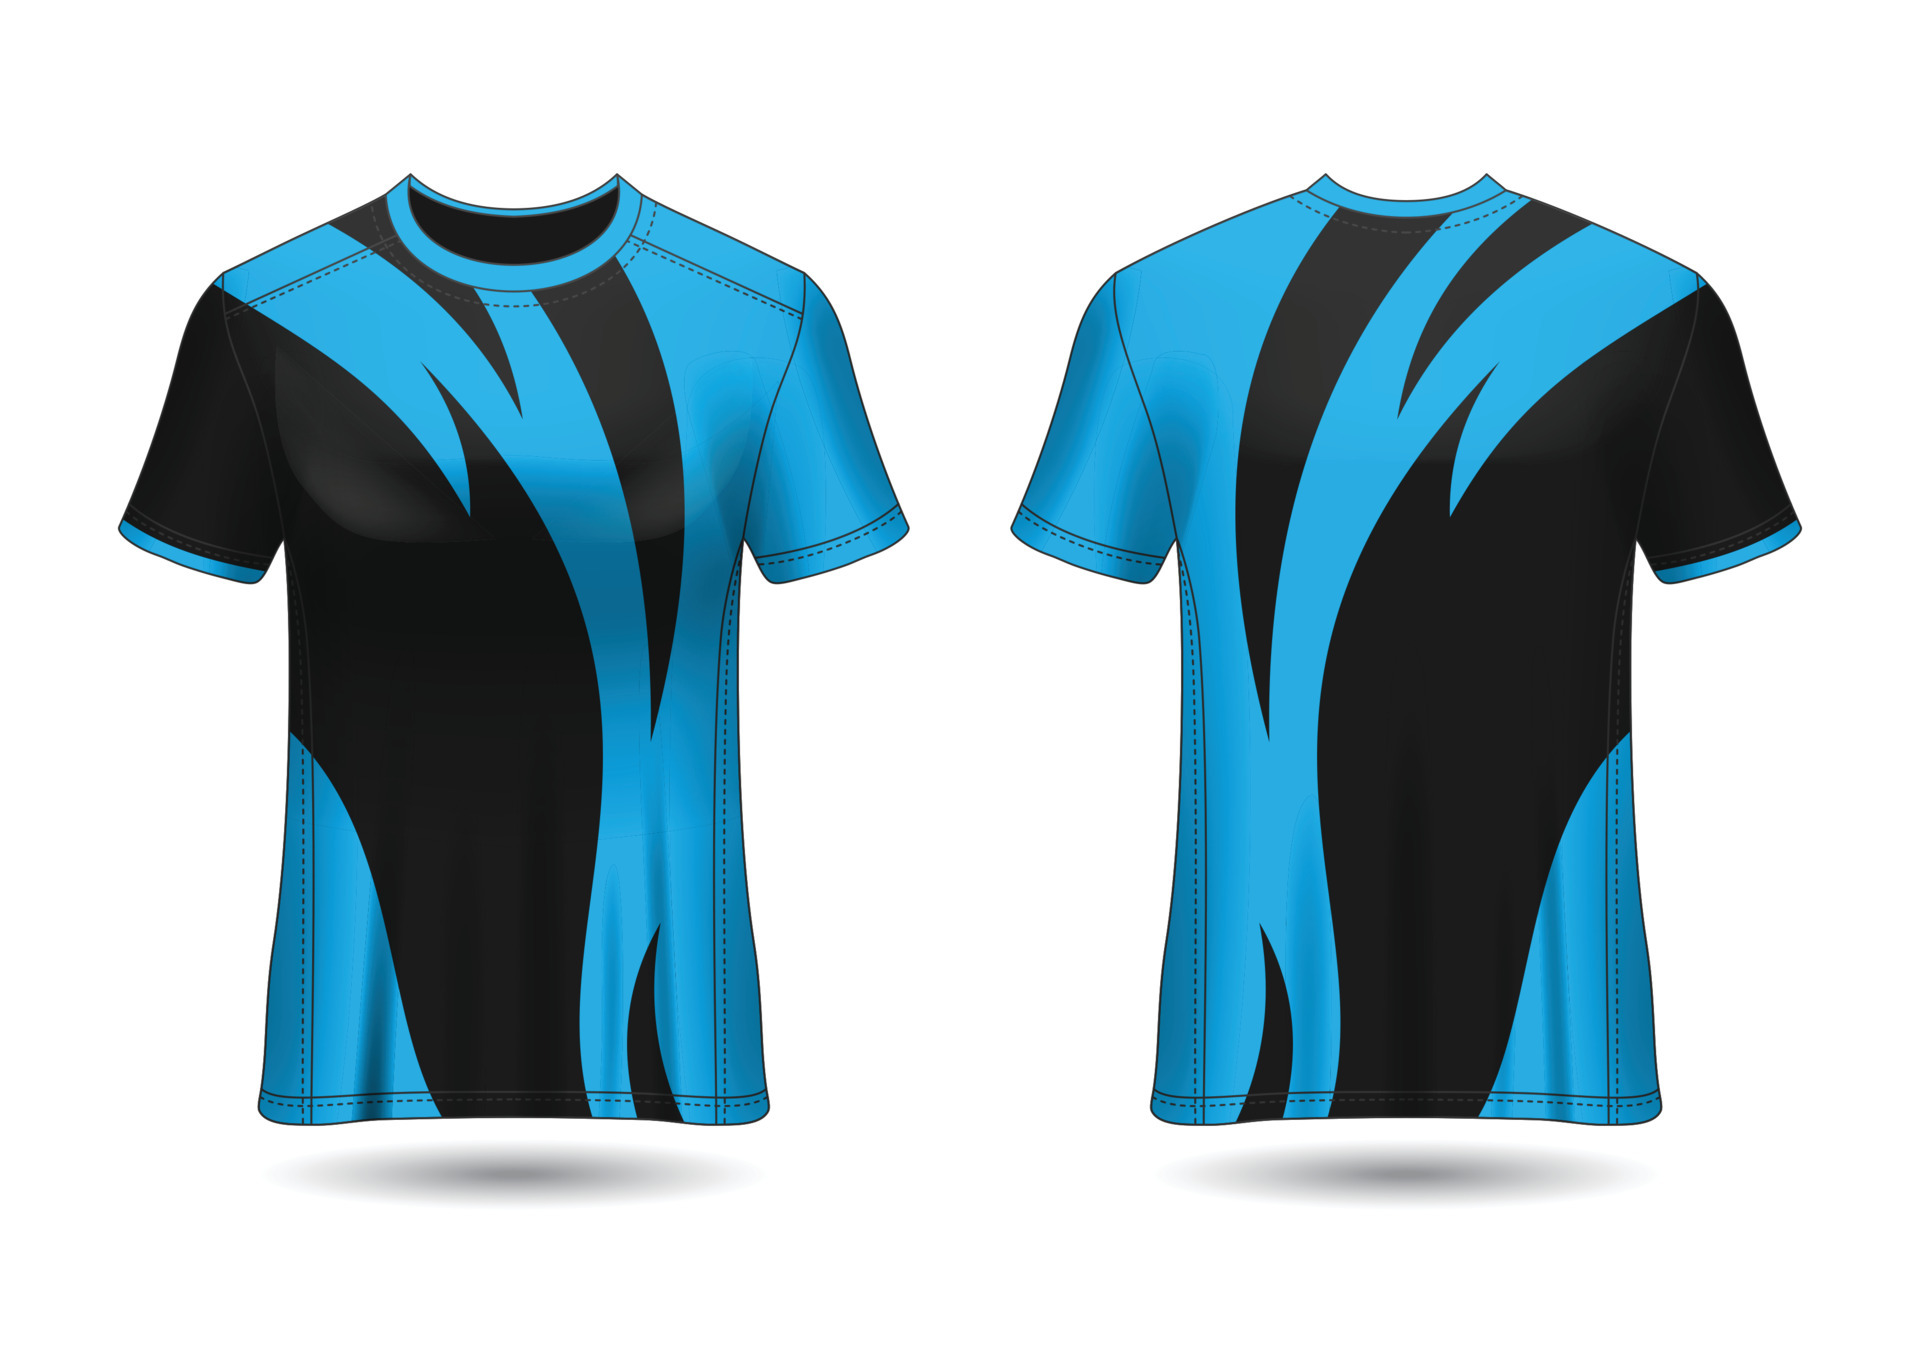 T-Shirt Sport Design. Racing jersey Vector 3690240 Vector Art at